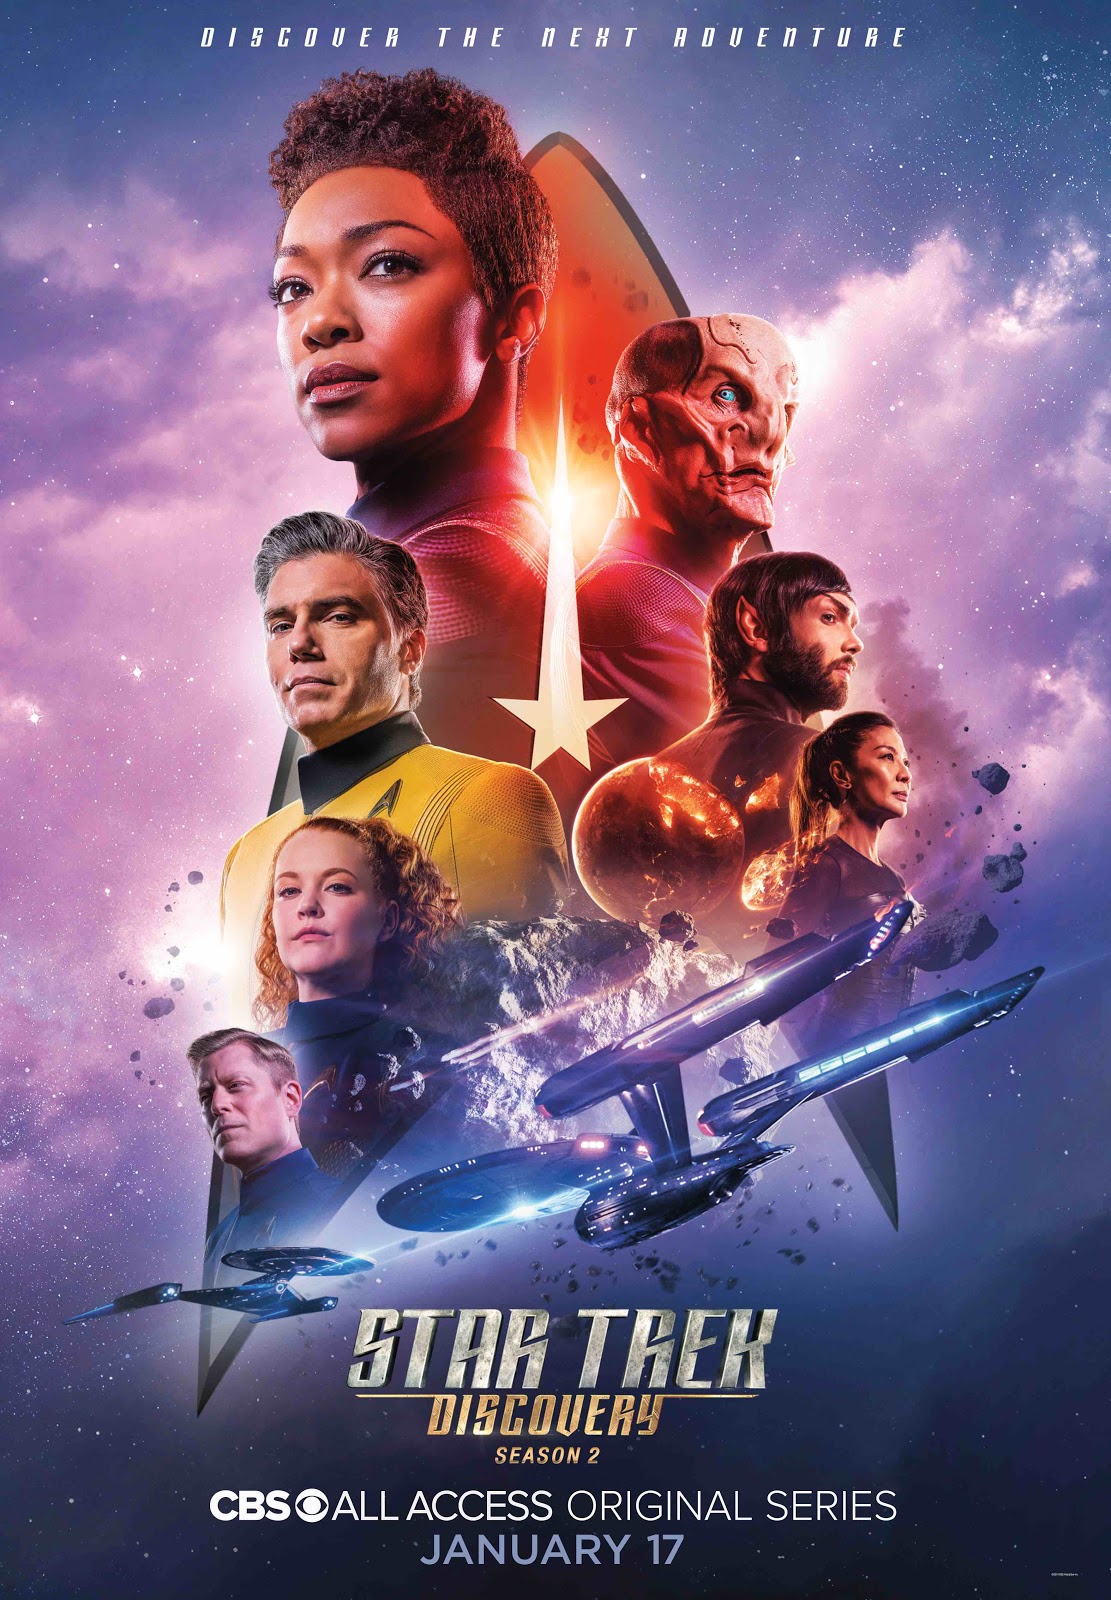 Star Trek Discovery season 2 official poster